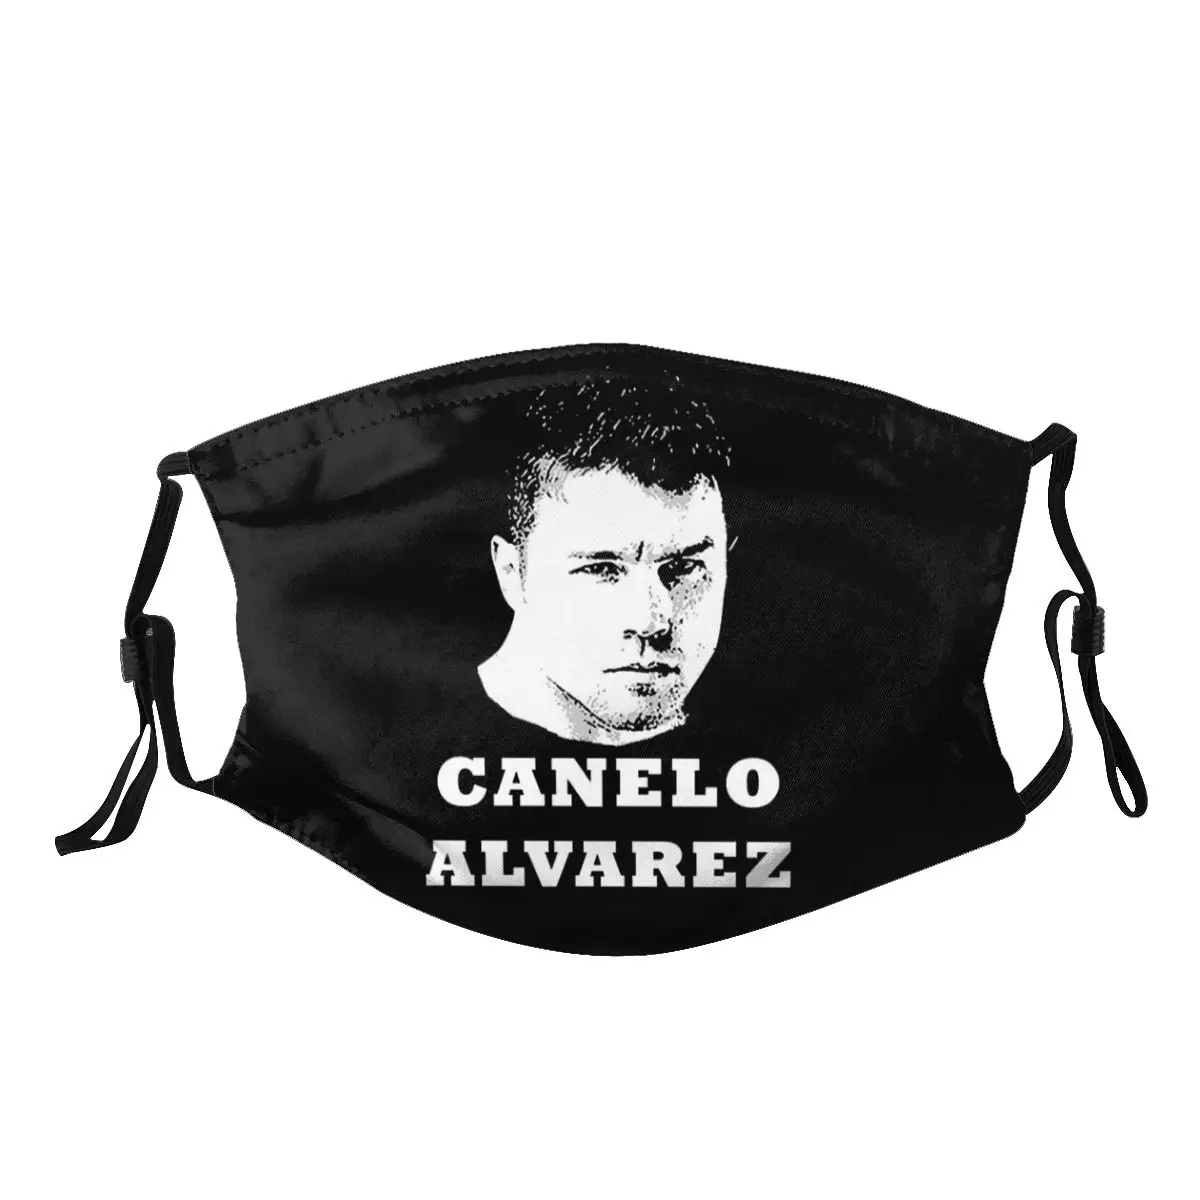 

Anime Canelos Alvarez Essential 2 Activated Carbon Filter Mask Funny Novelty R257 False Front